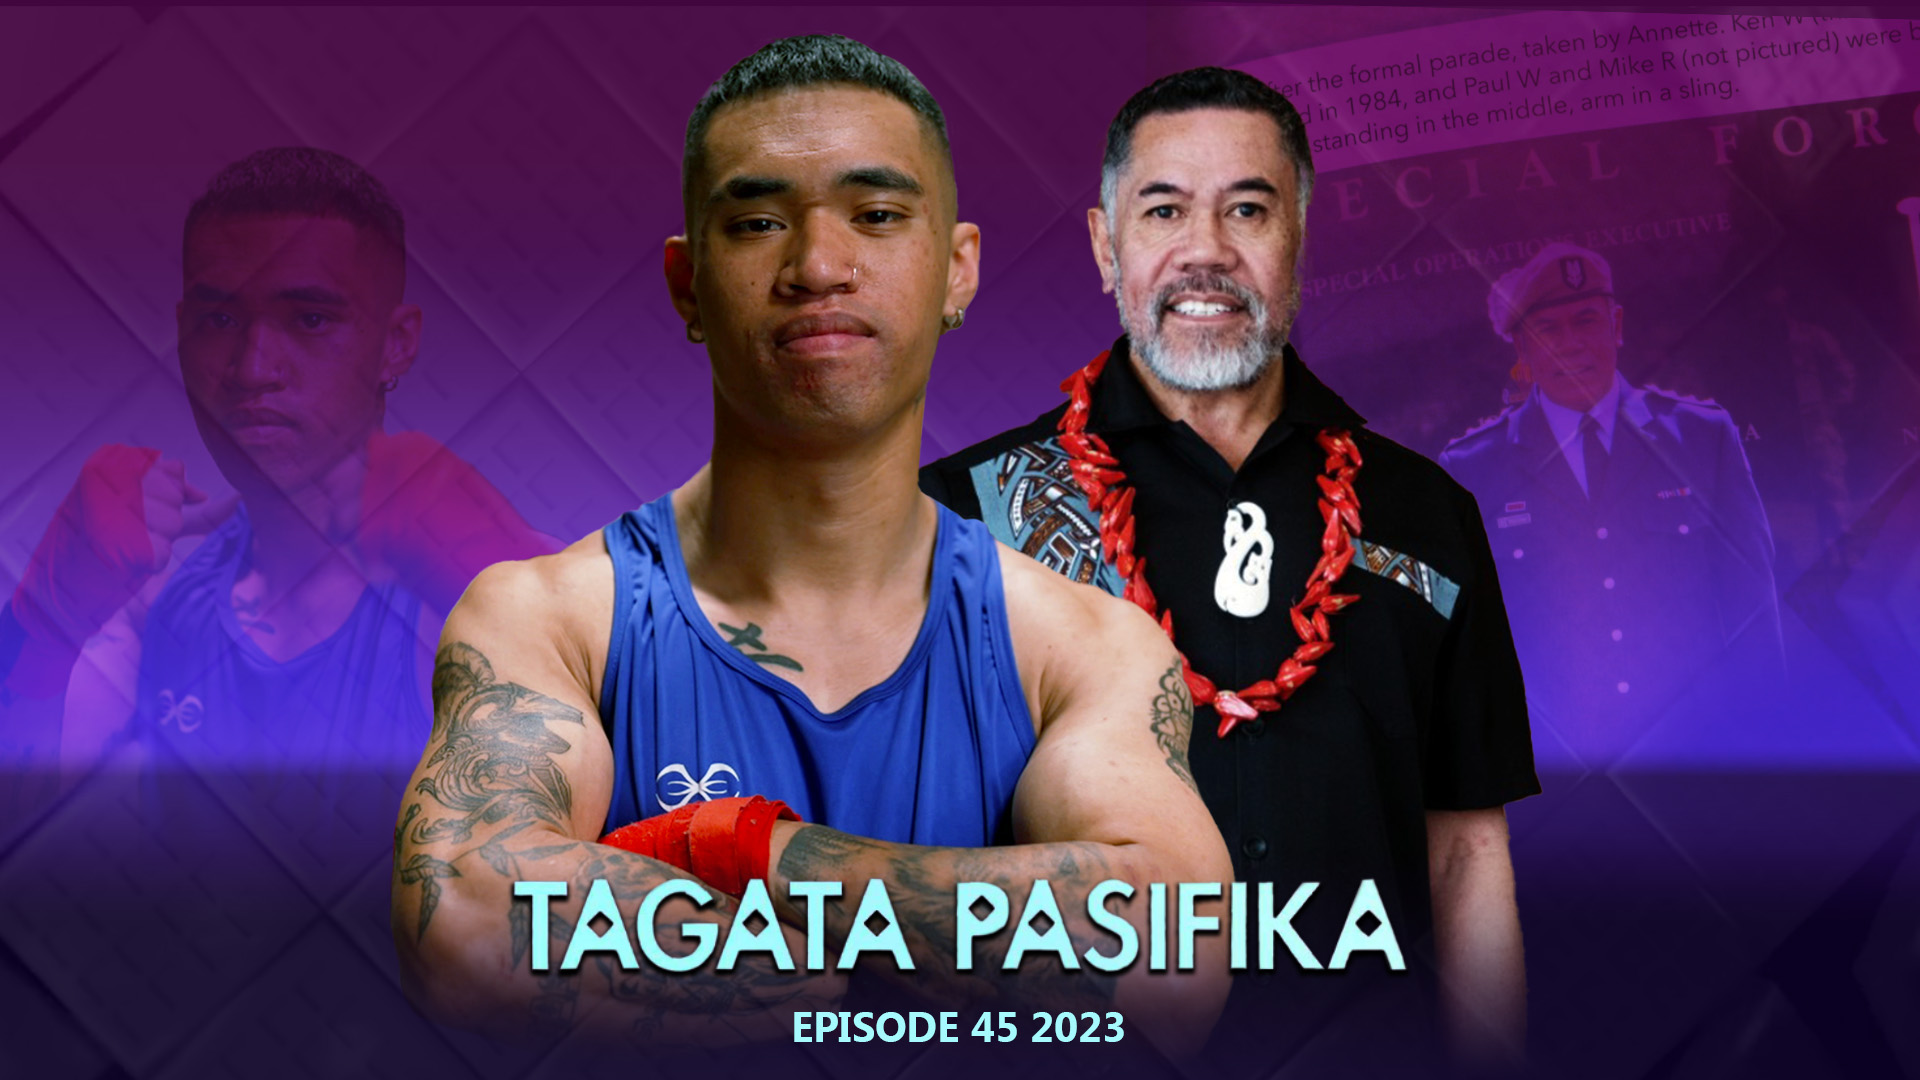 WATCH: Tagata Pasifika 2023 Episode 45